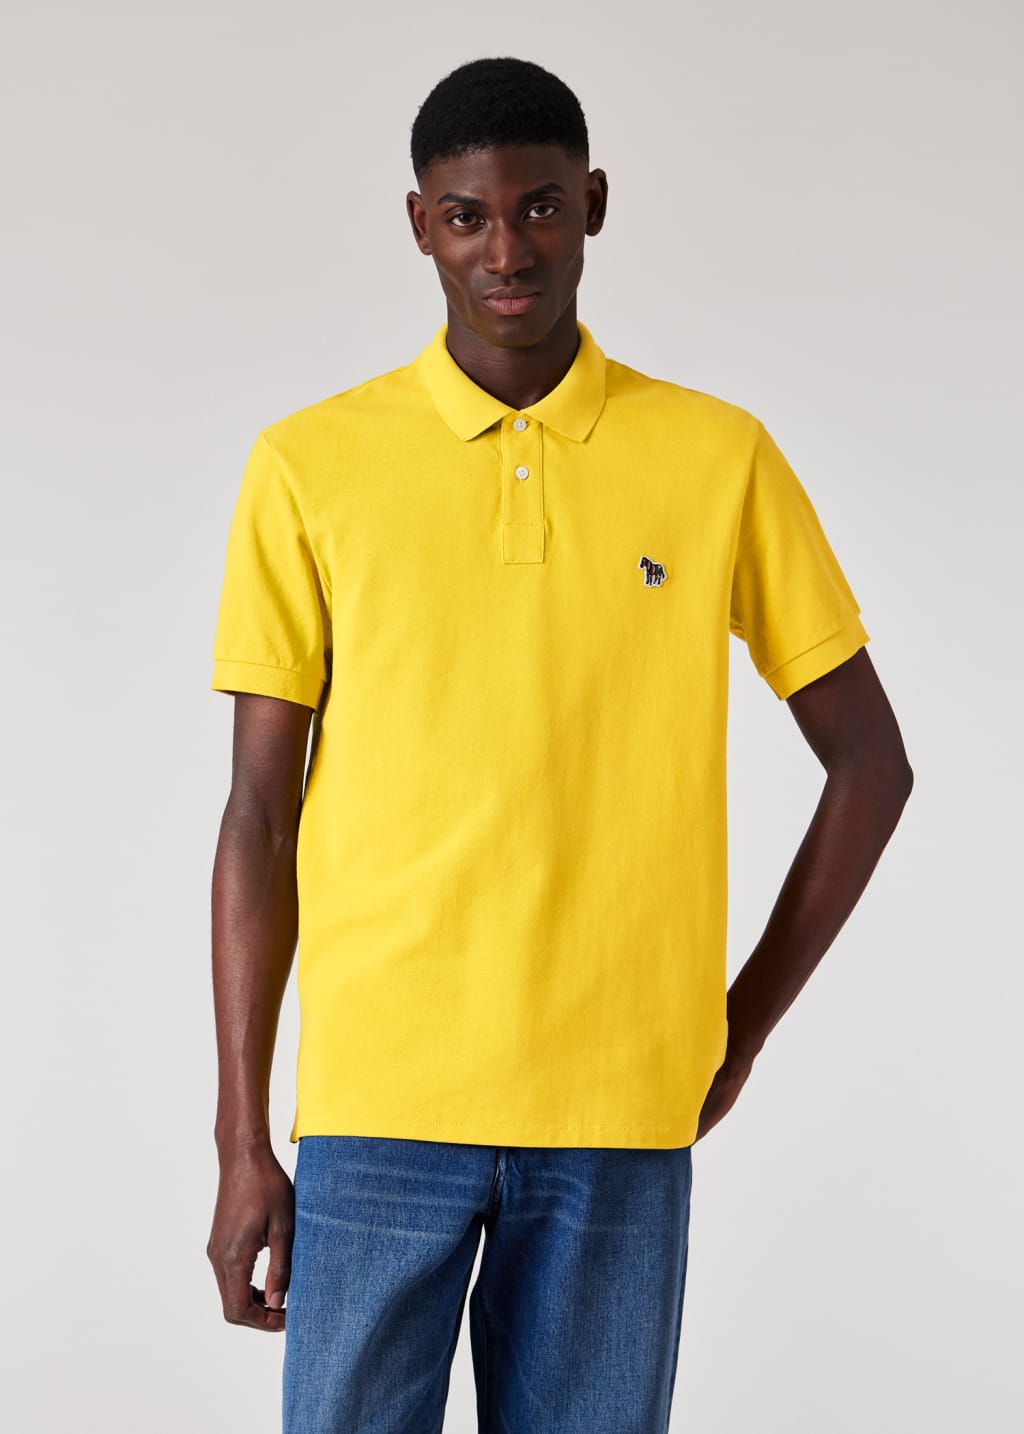 Model View - Yellow Chartreuse Organic Cotton Zebra Polo Shirt Paul Smith